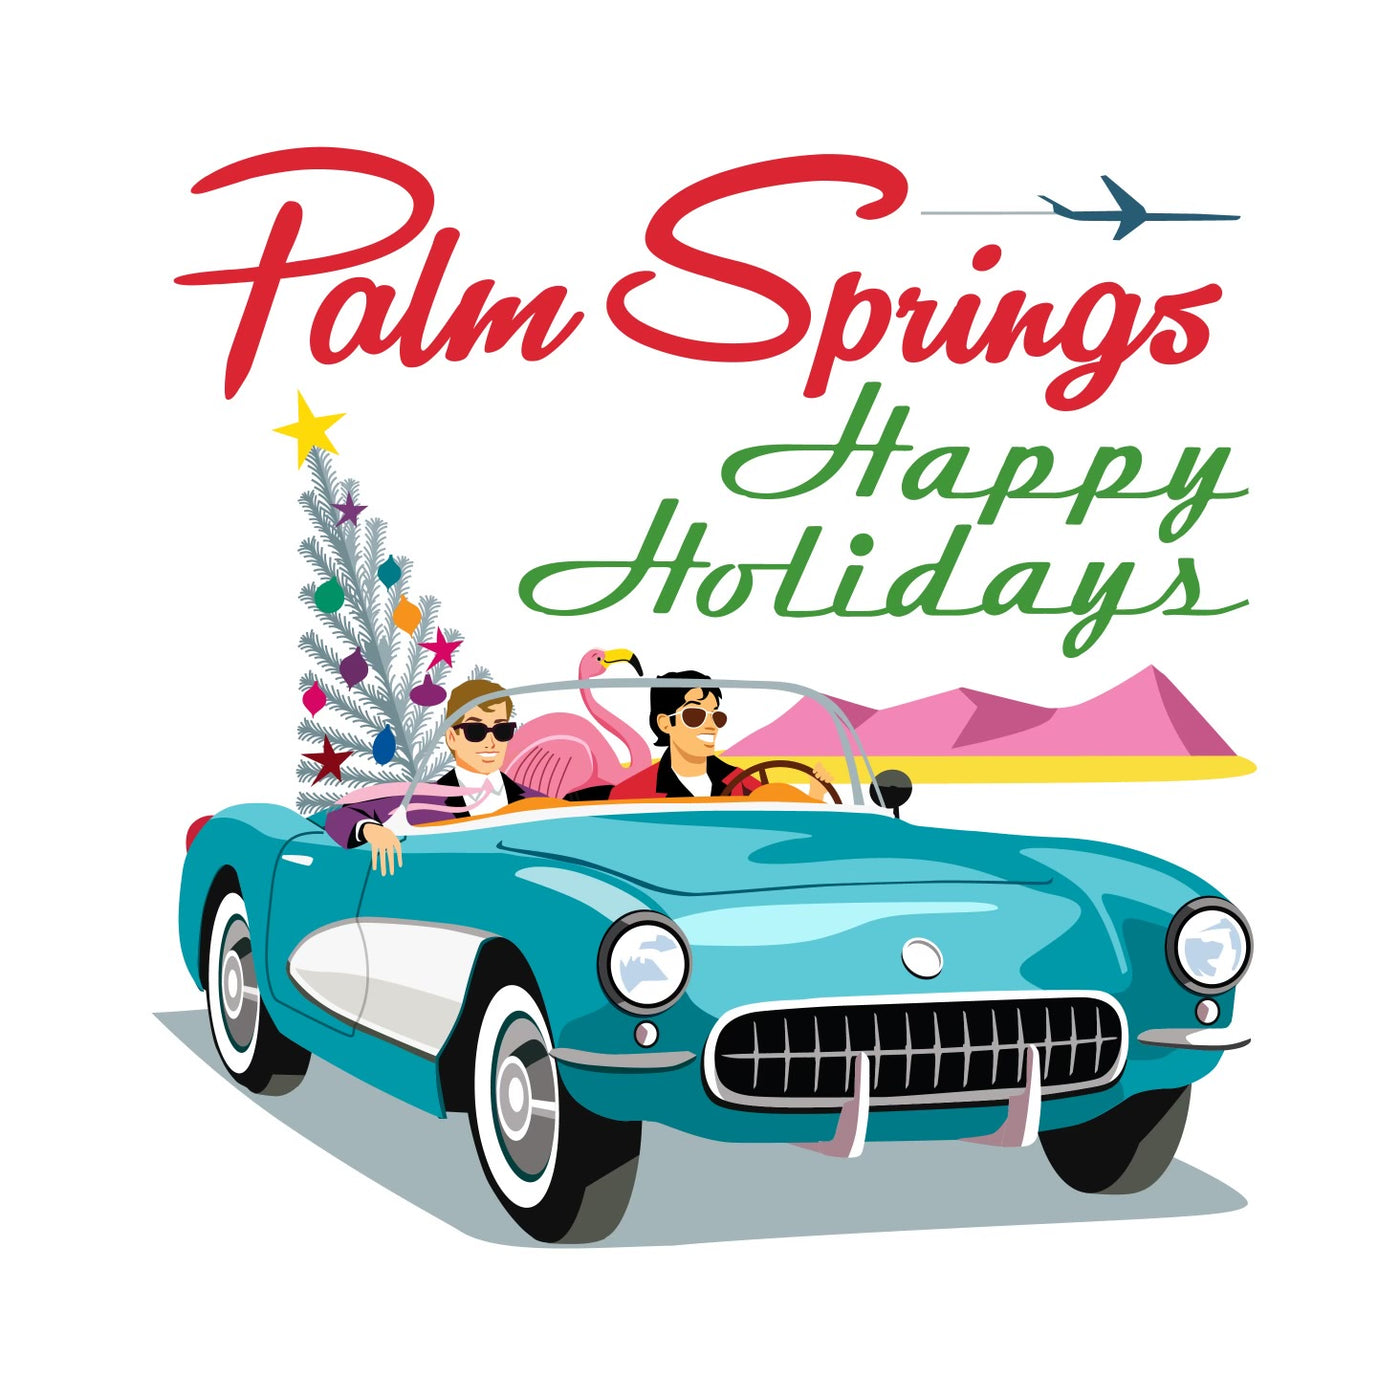 Palm Springs Holiday Corvette Coaster